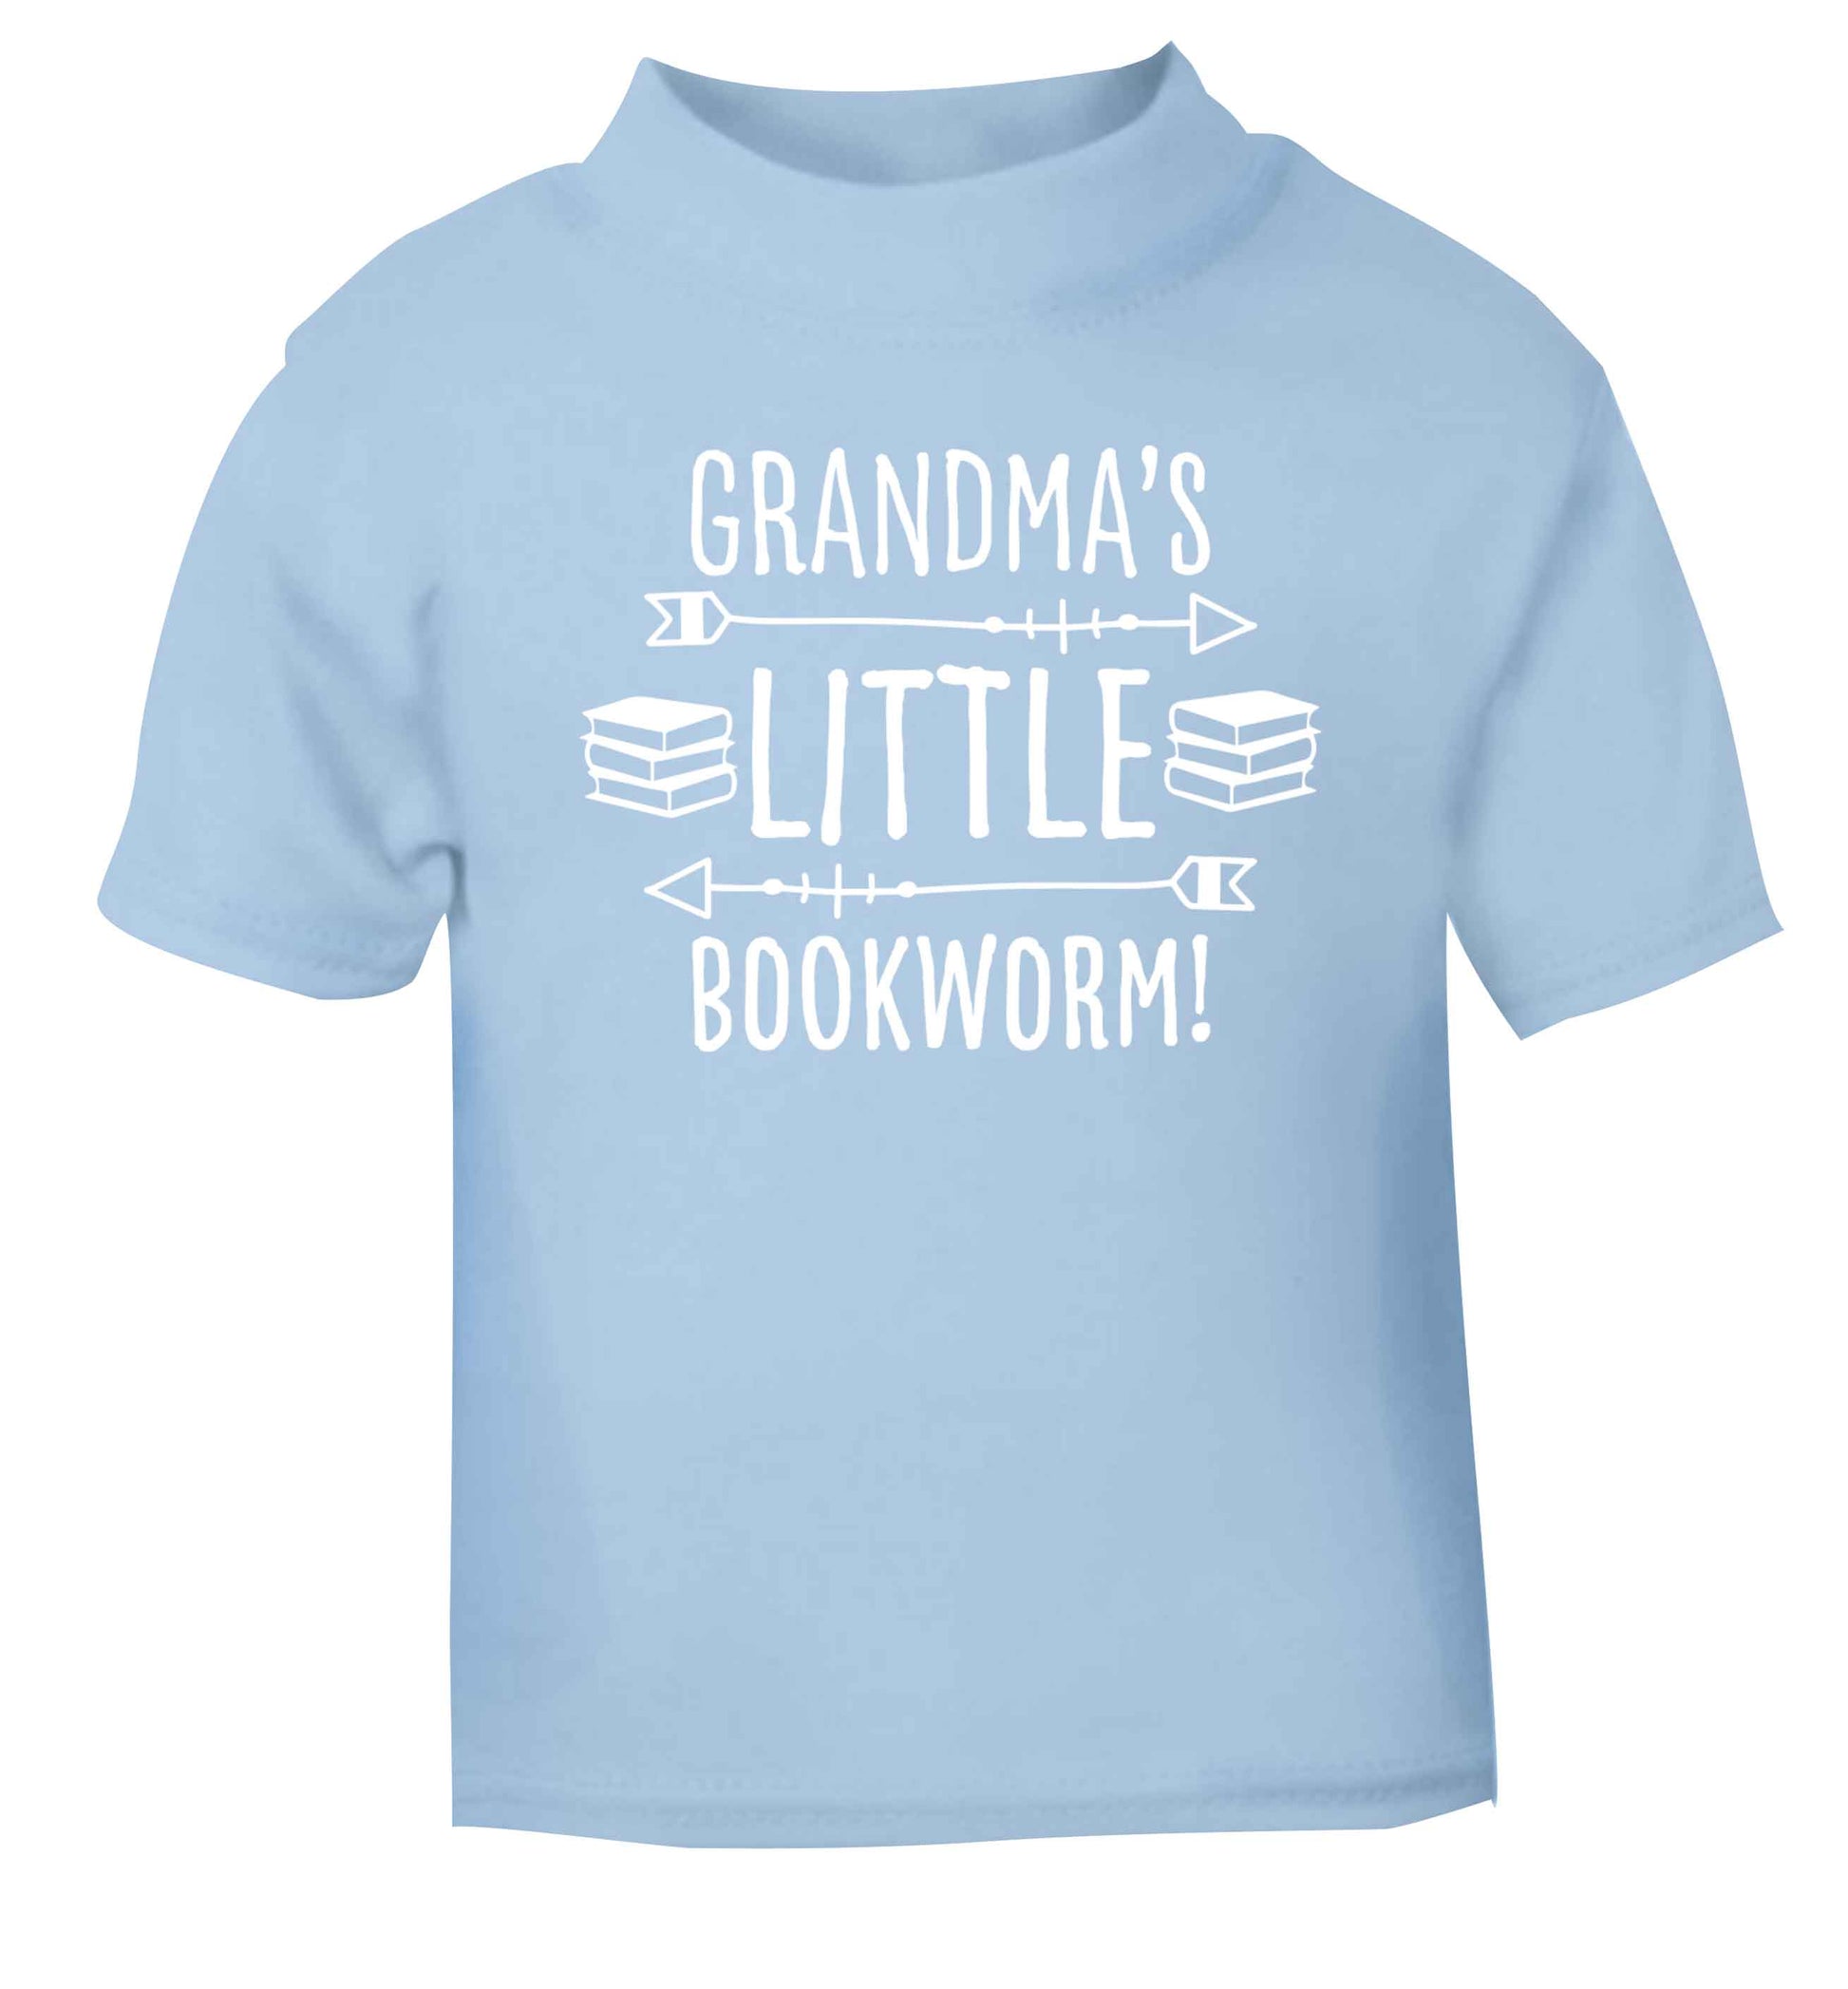 Grandma's little bookworm light blue baby toddler Tshirt 2 Years